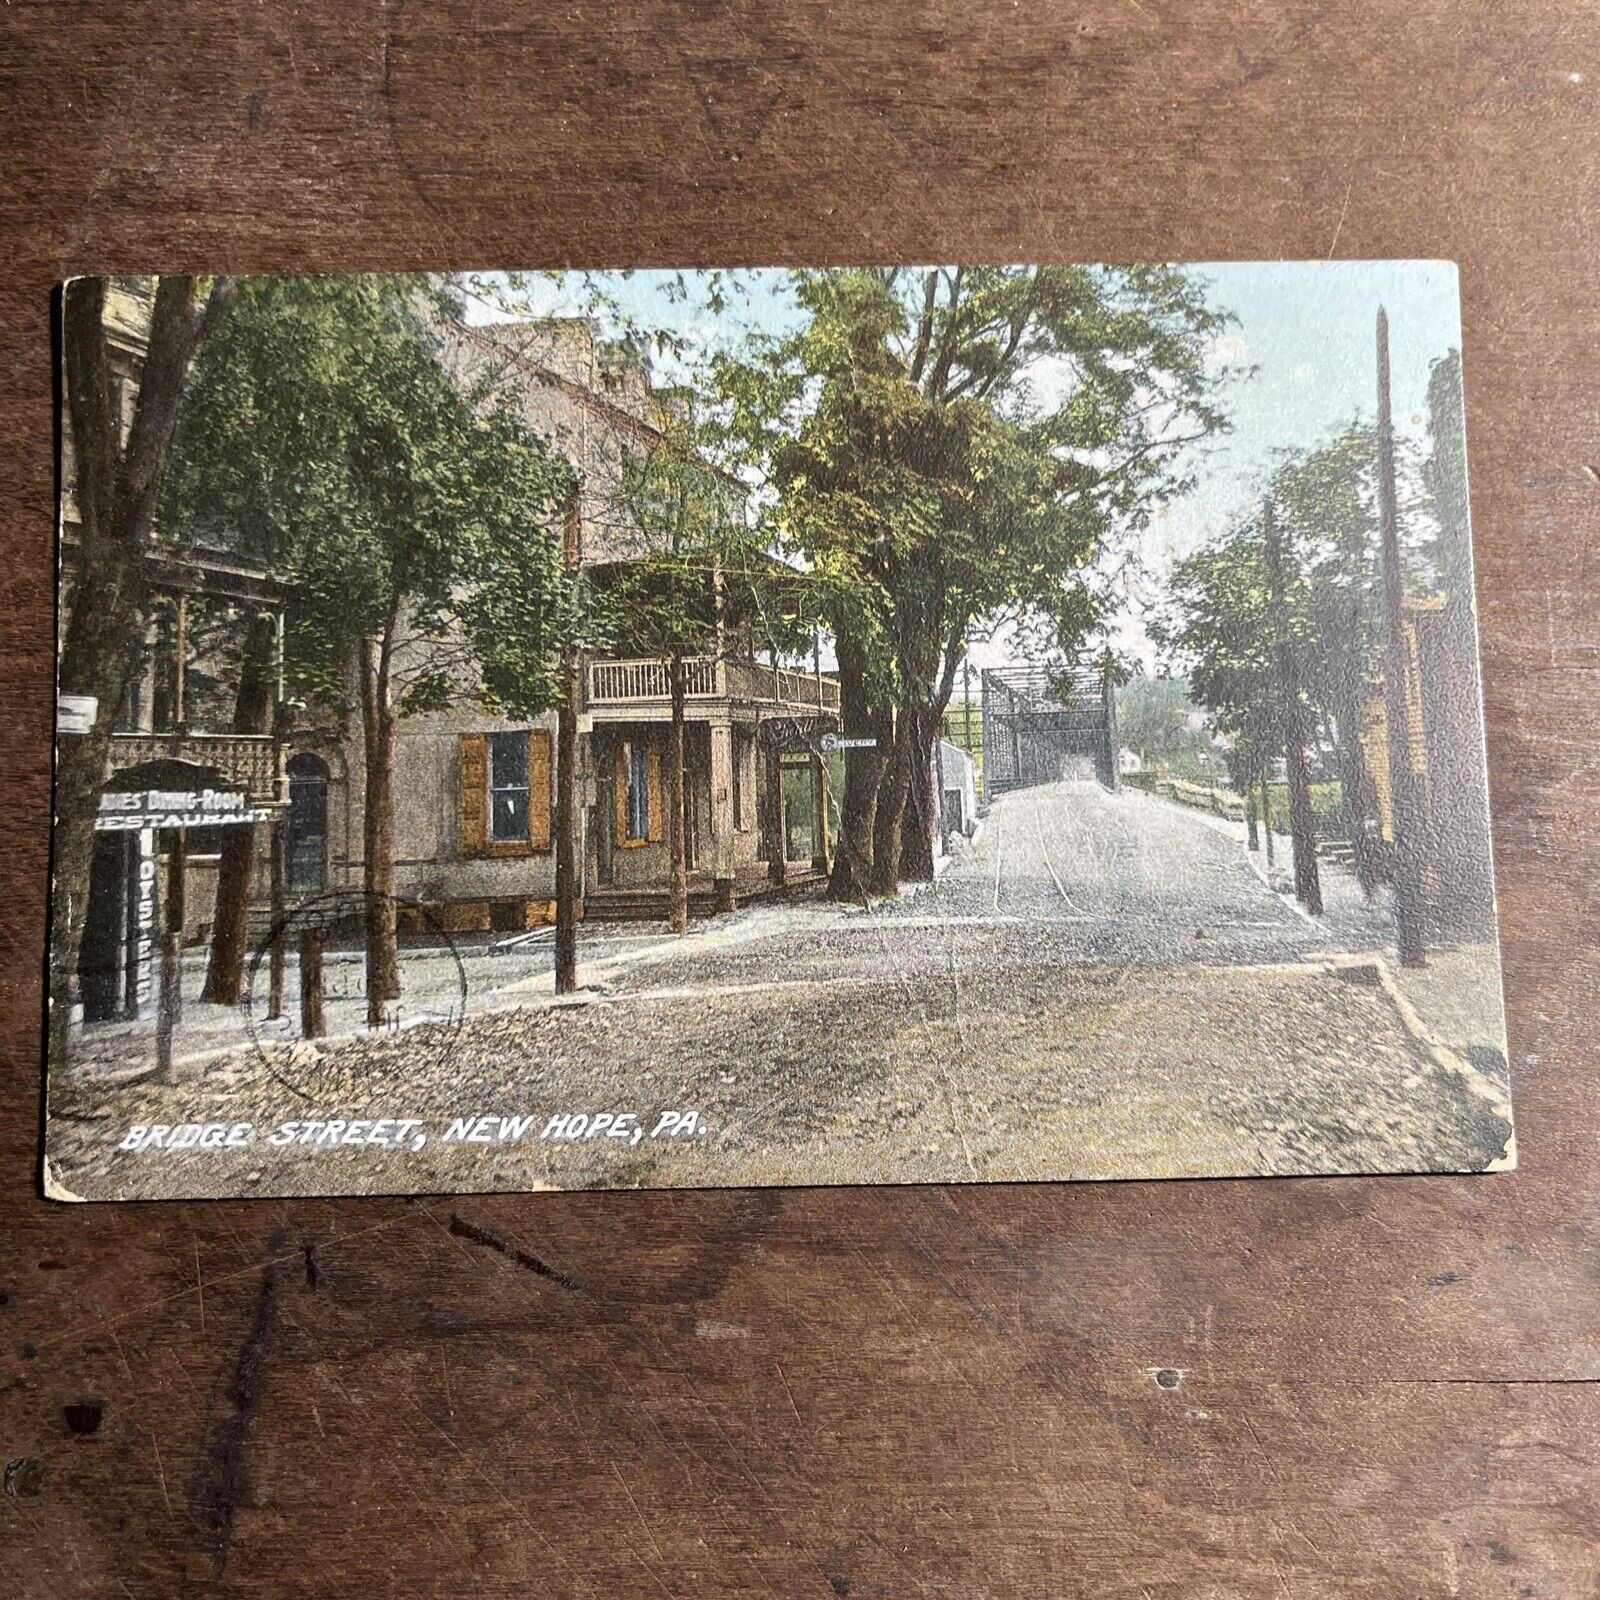 Antique Postcard Bridge Street New Hope Pa 1908 Street View